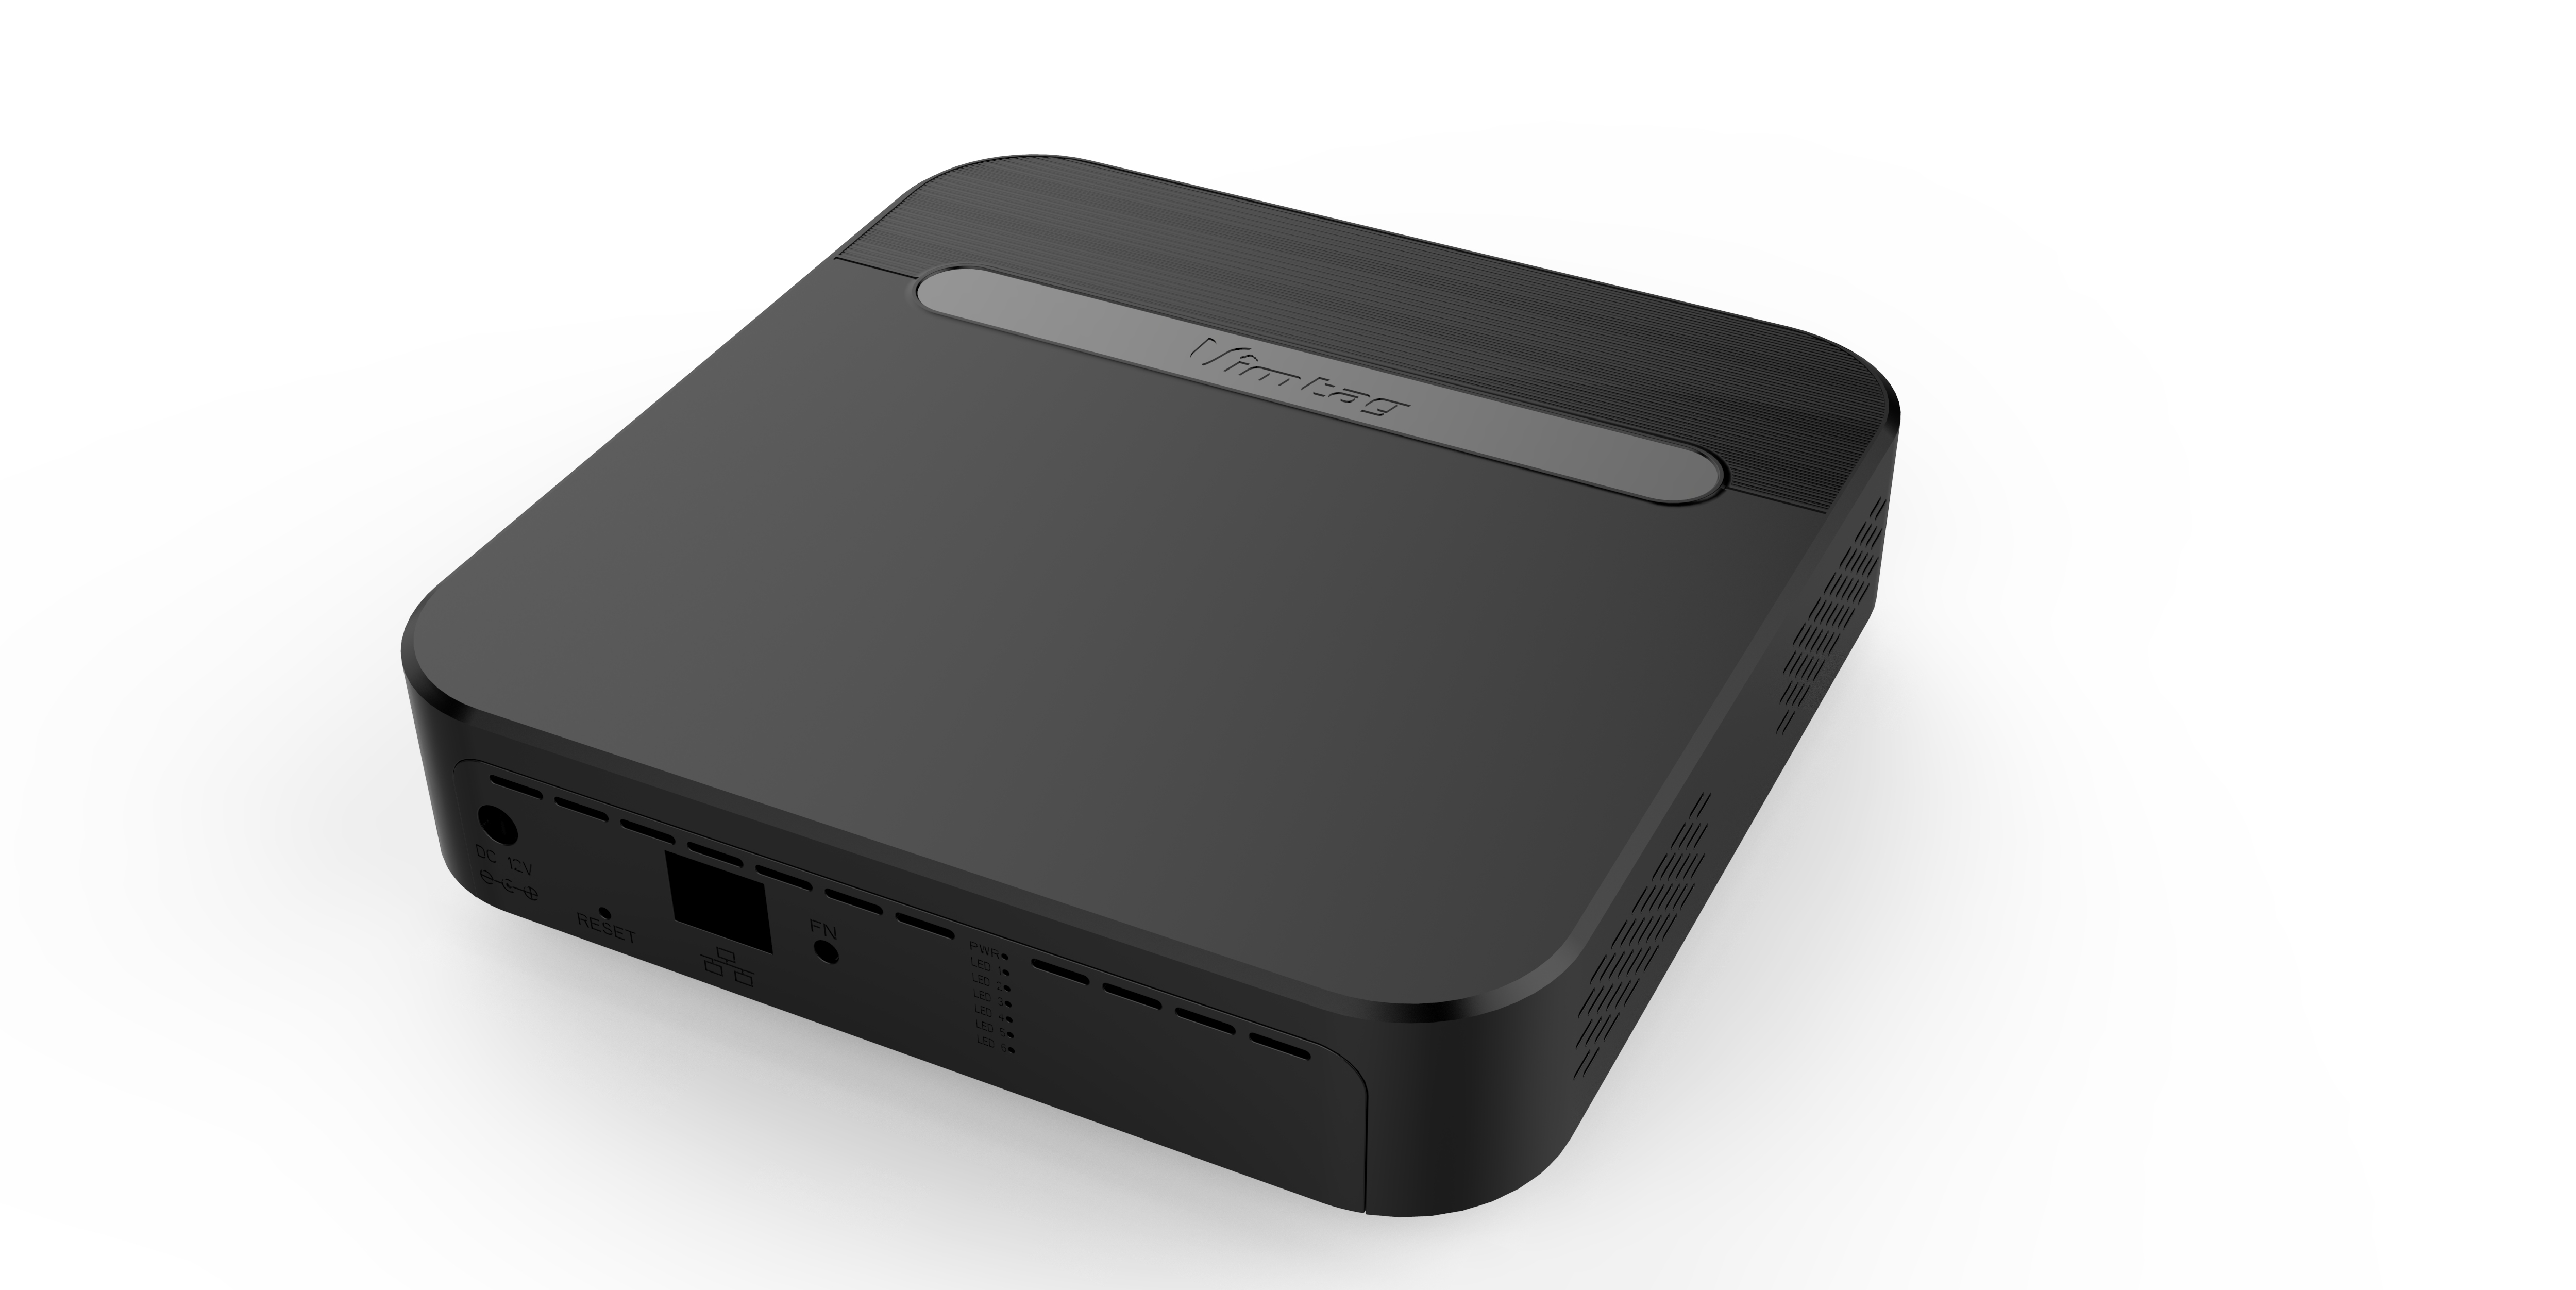 Vimtag Memo Series Cloud Box S1-1T, 8channels 1080P video recorder, 1 TB HDD, LAN